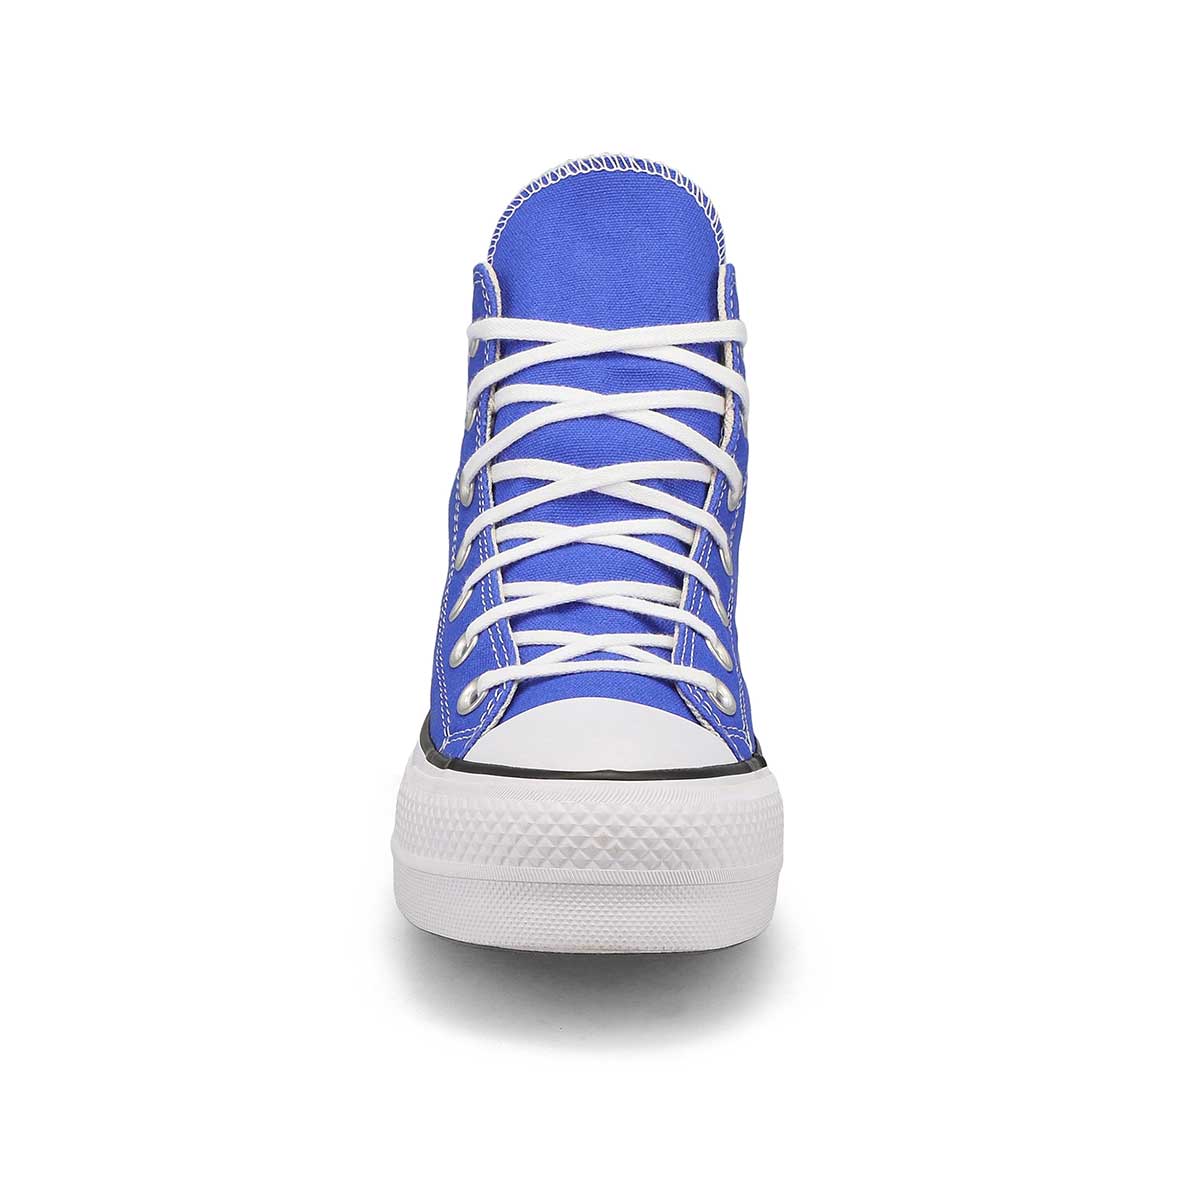 Women's Chuck Taylor All Star Lift Hi Top Platform Sneaker - Blue/White/Black